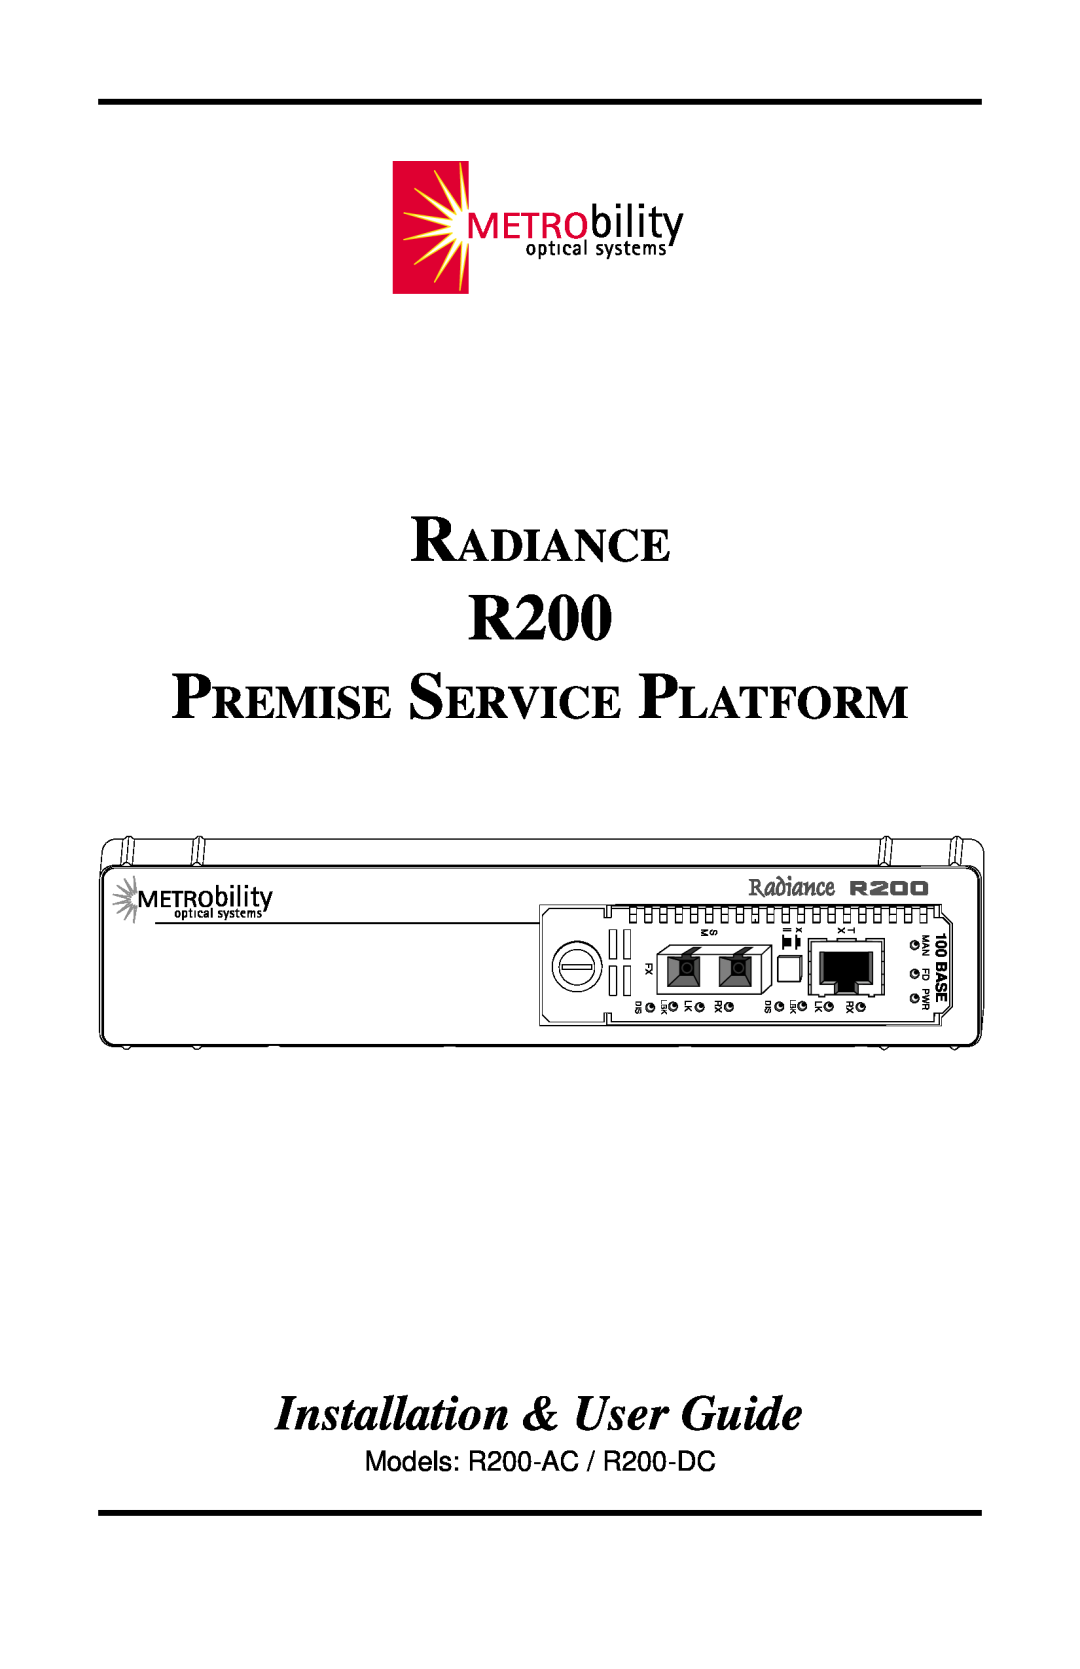 METRObility Optical Systems R200 manual Installation & User Guide, Radiance, Premise Service Platform, Base, Fd Pwr 